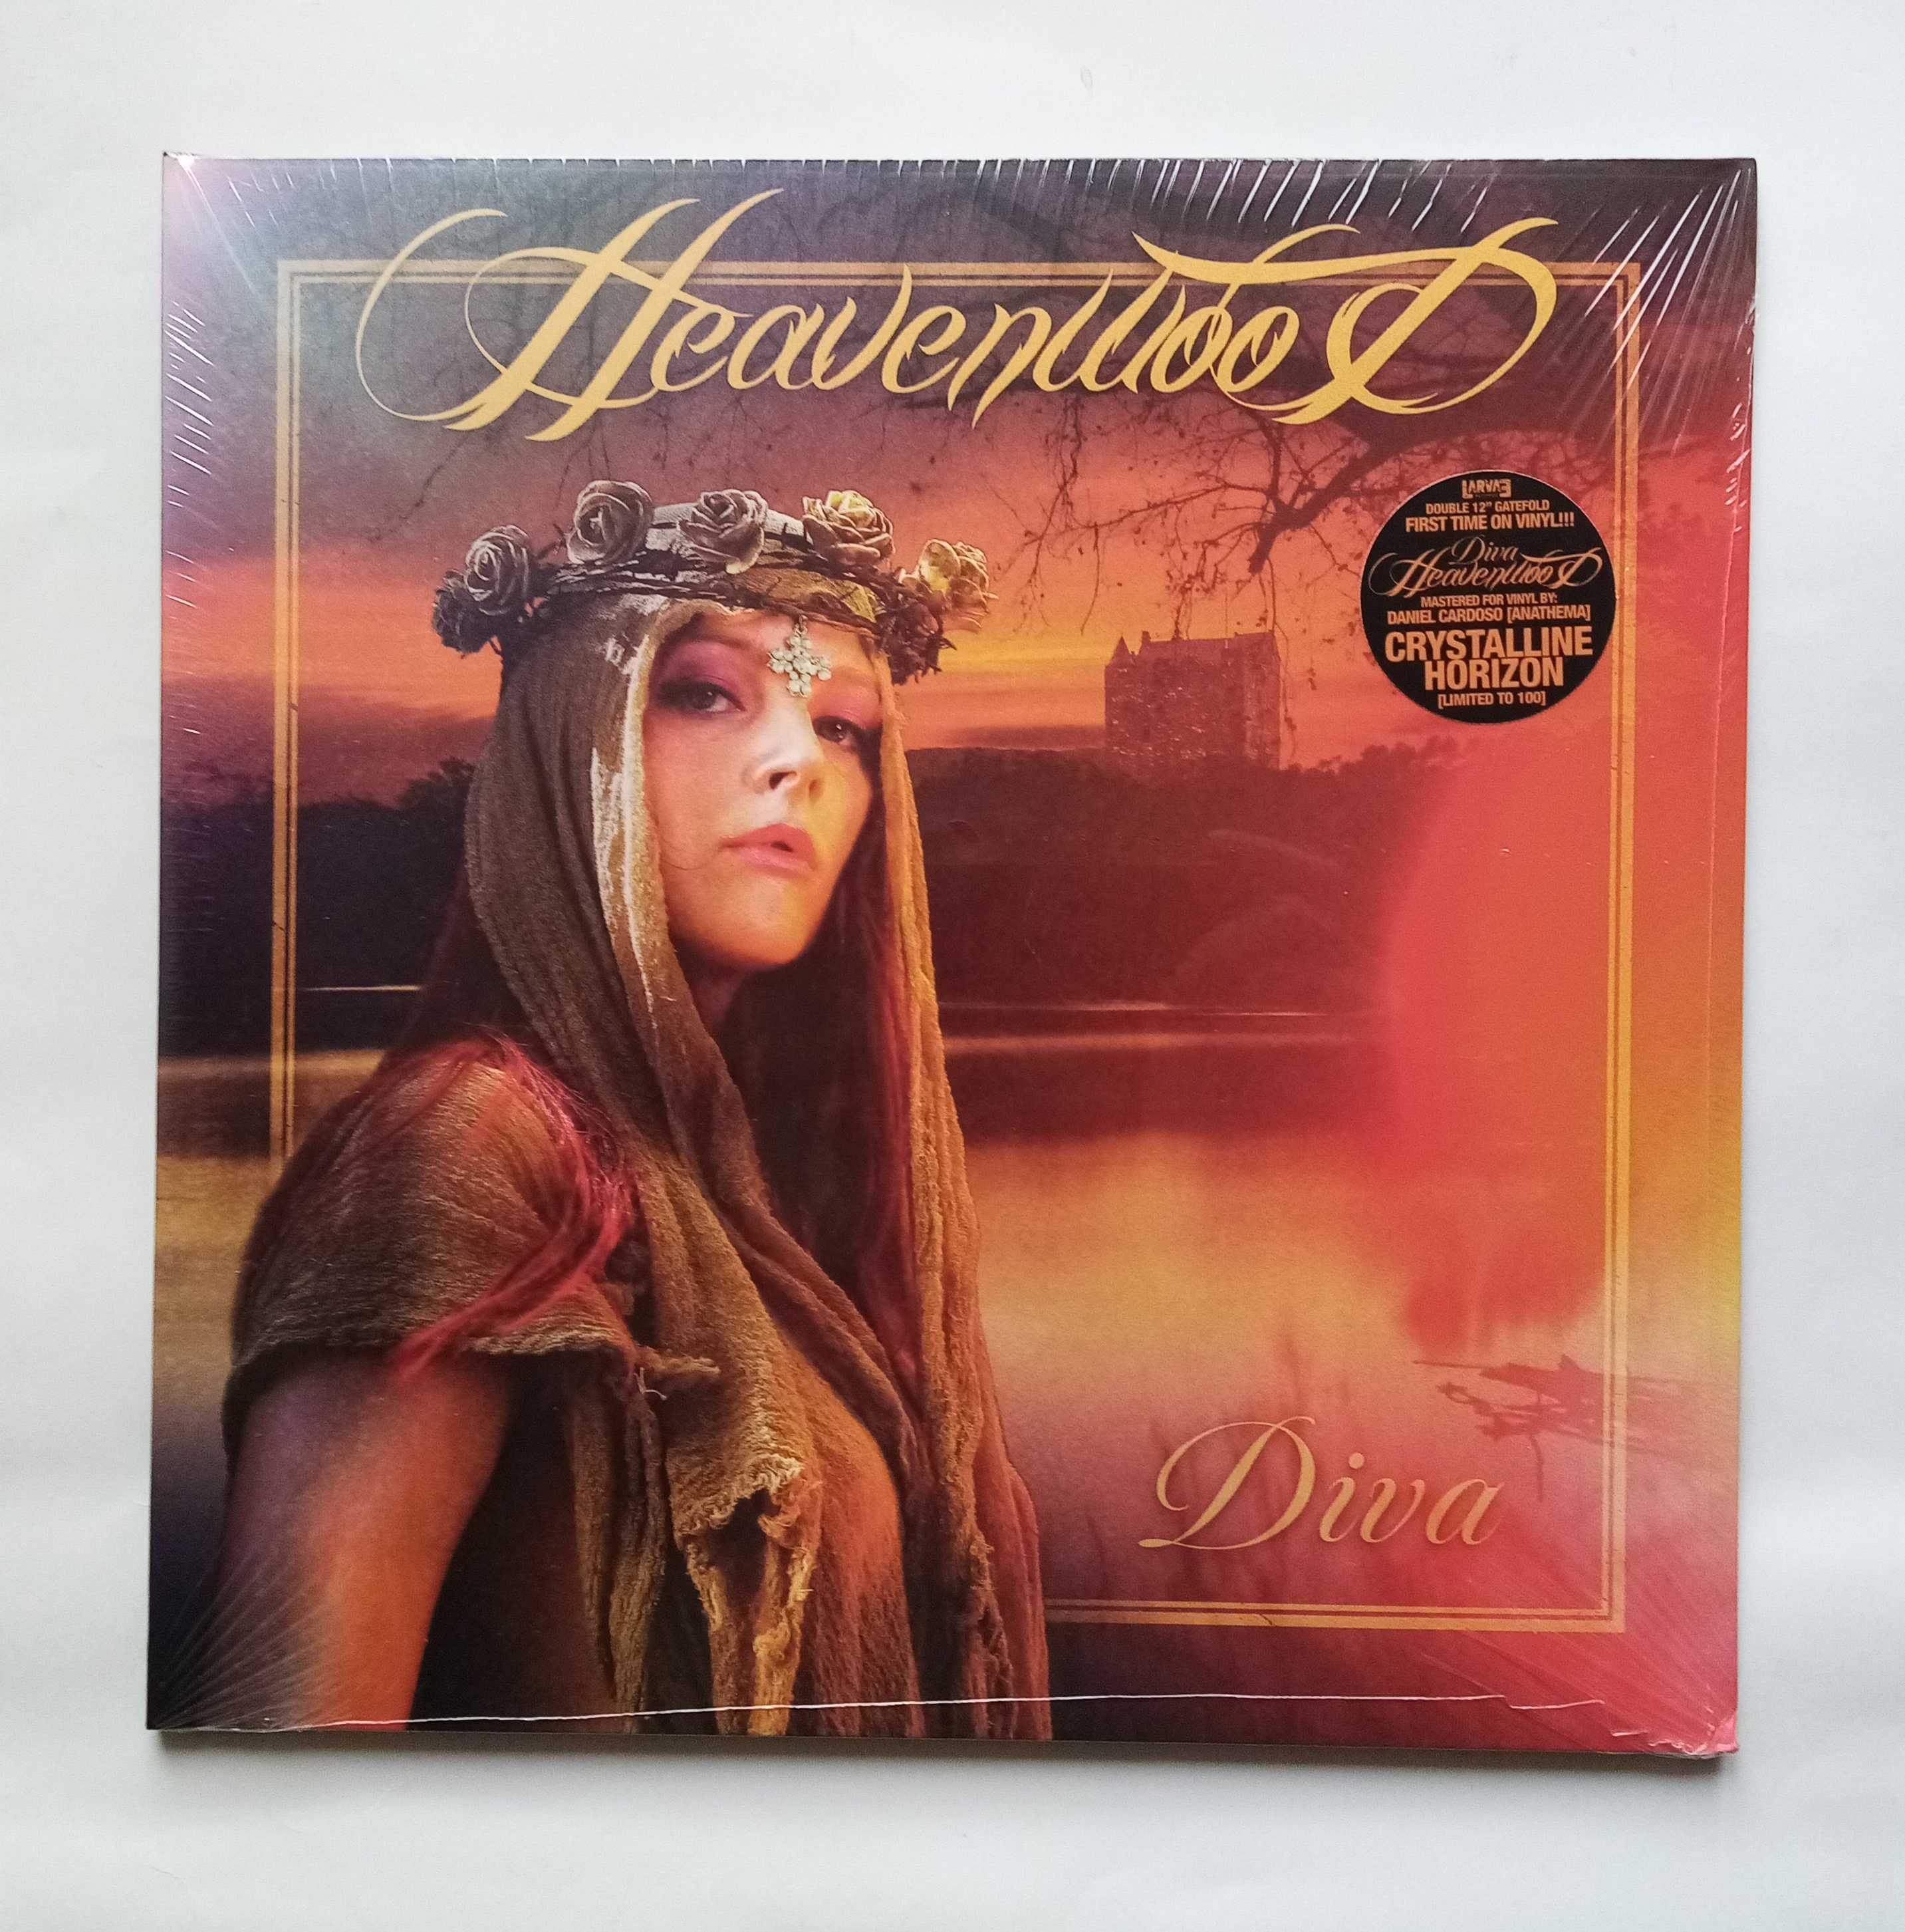 HEAVENWOOD "Diva" Crystalline Horizon Vinyl